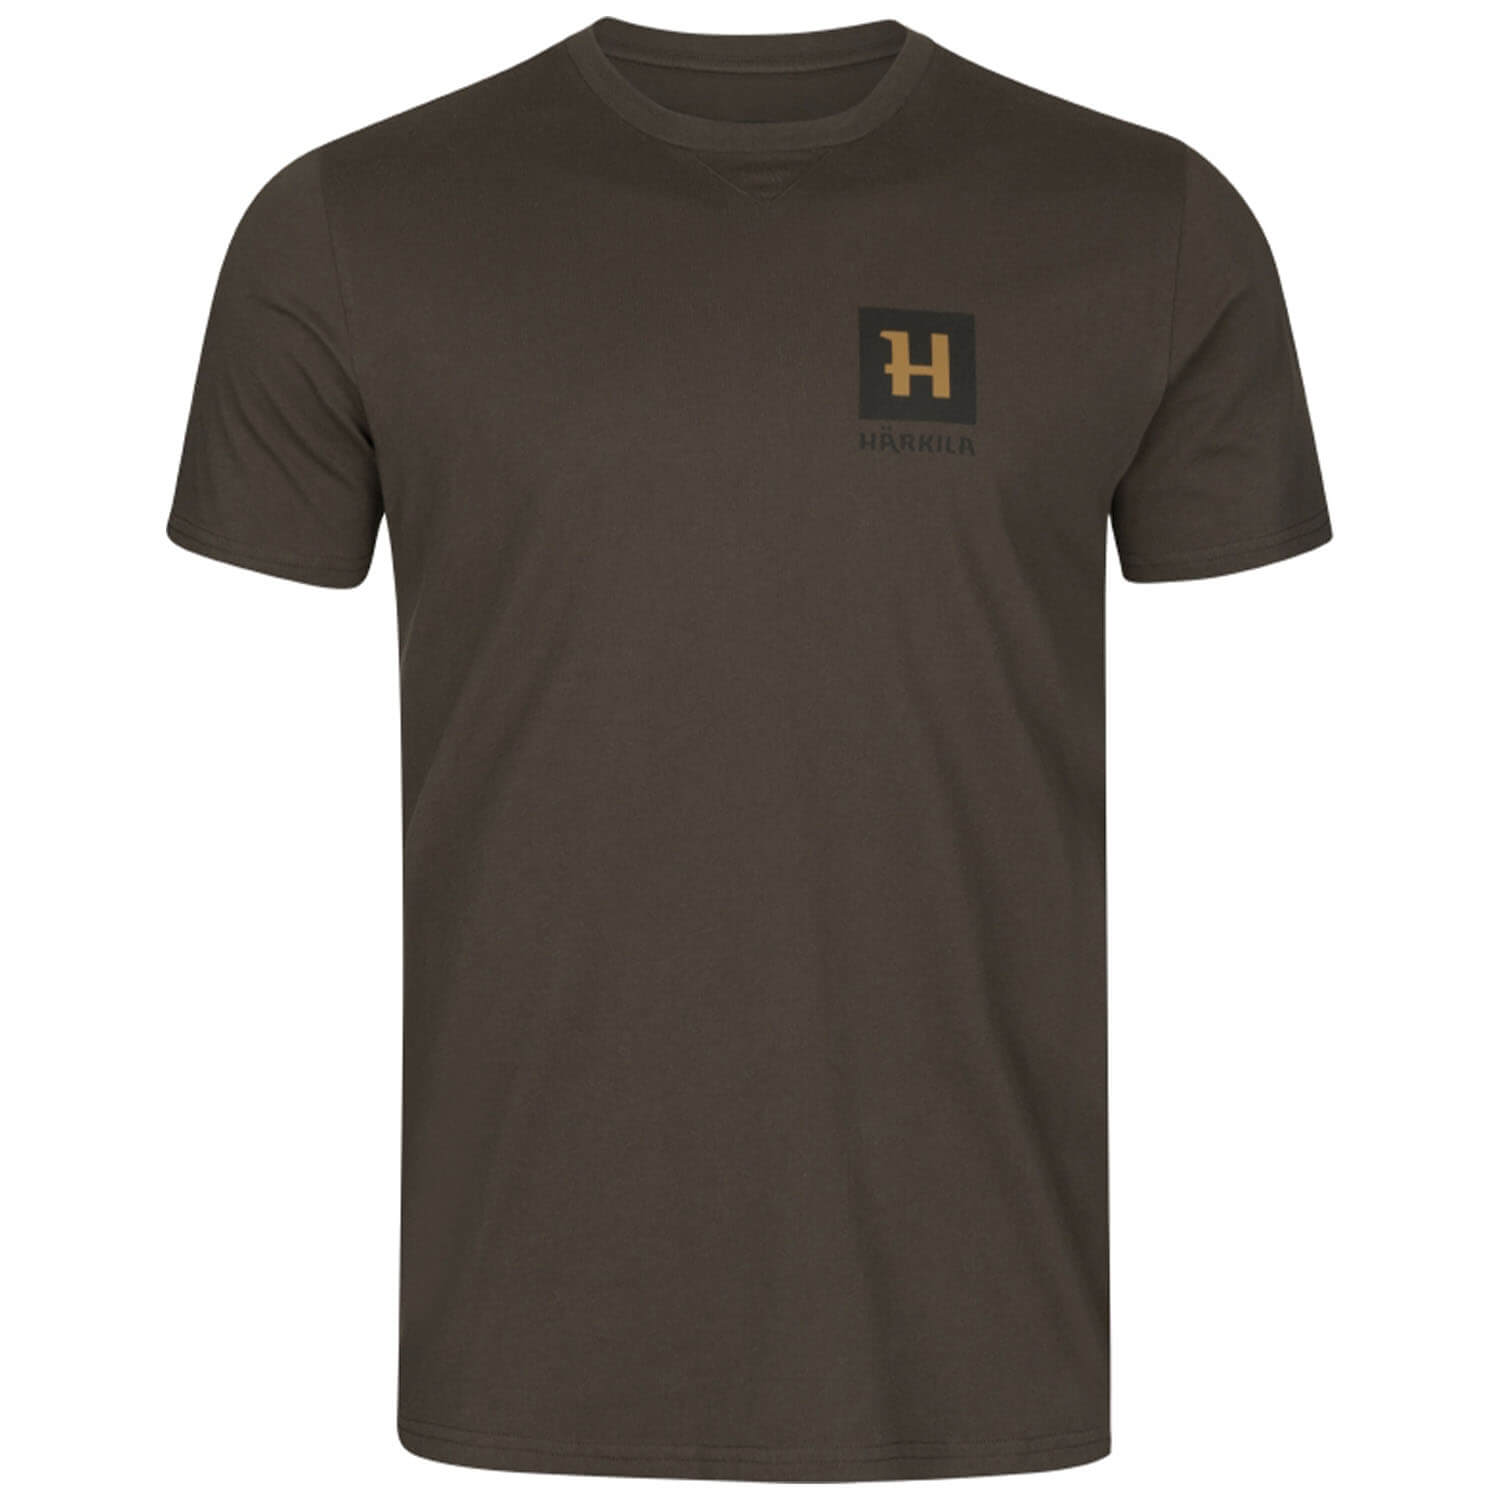  Härkila T-shirt Gorm (Schaduwbruin) - Jachtshirts